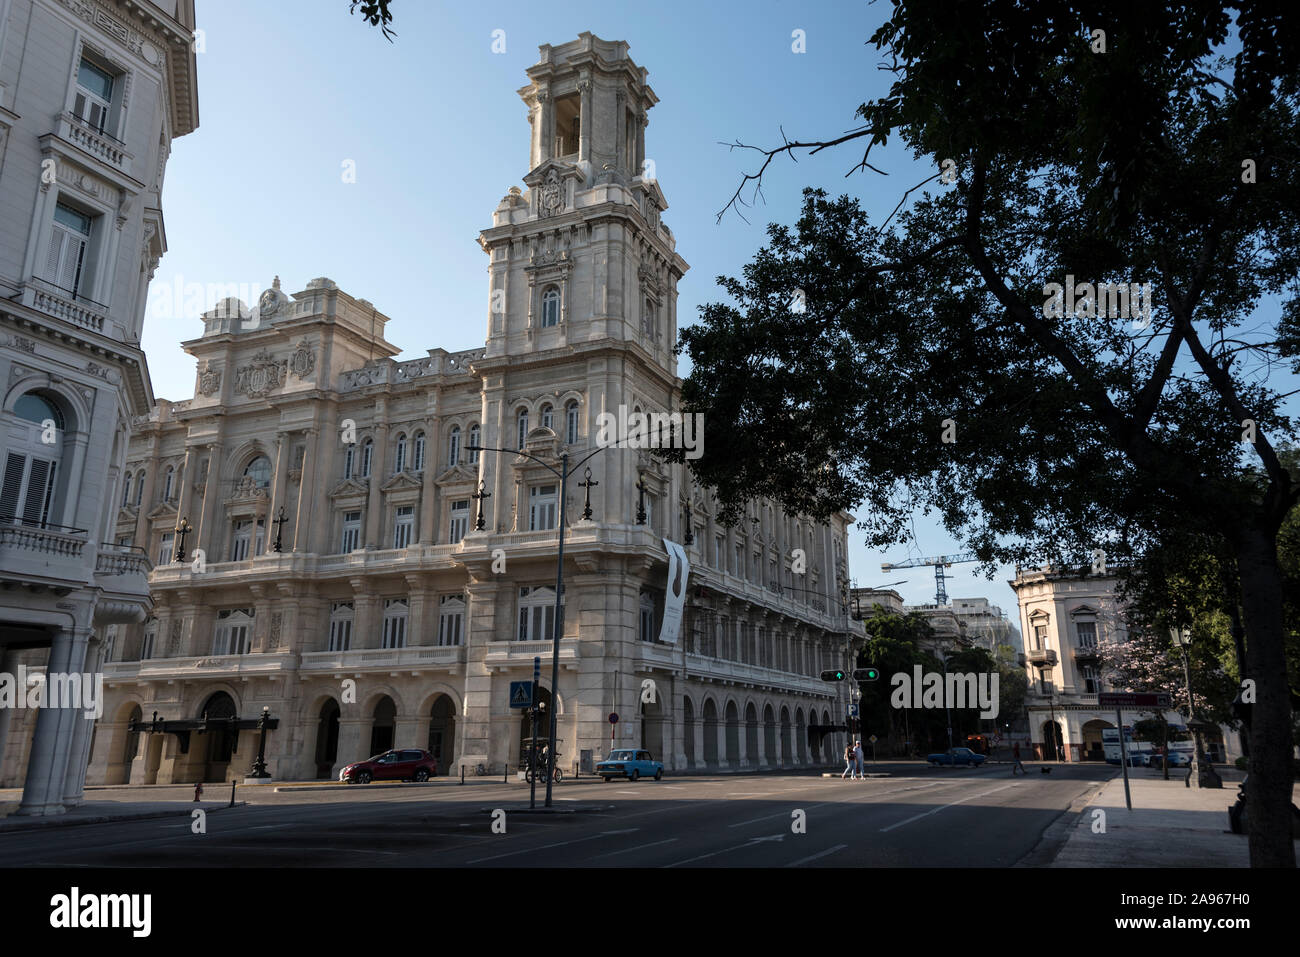 Das Museo Nacional de Bellas Artes de La Habana (Nationalmuseum der Schönen Künste von Havanna) in Havanna, Kuba. Das Museum der Schönen Künste zeigt kubanische Kunst Stockfoto